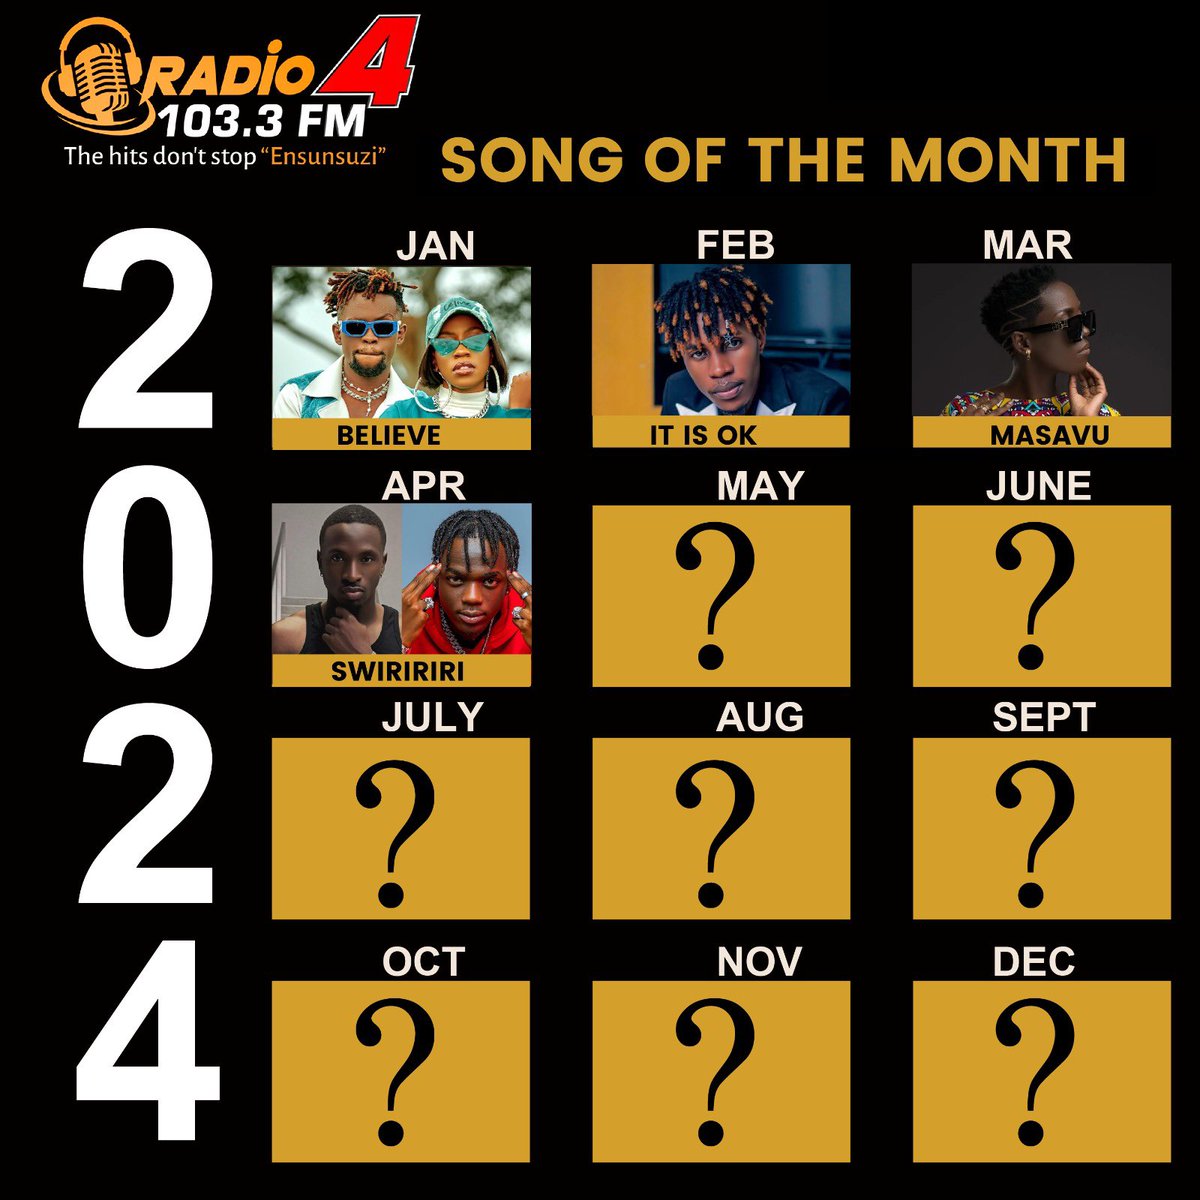 𝐒𝐨𝐧𝐠 𝐨𝐟 𝐭𝐡𝐞 𝐌𝐨𝐧𝐭𝐡! Swiririri by Kapeke ft @RickmanManrick bossing the month of April. Which song takes over the month of MAY? #Ensunsuzi || #Radio4UG